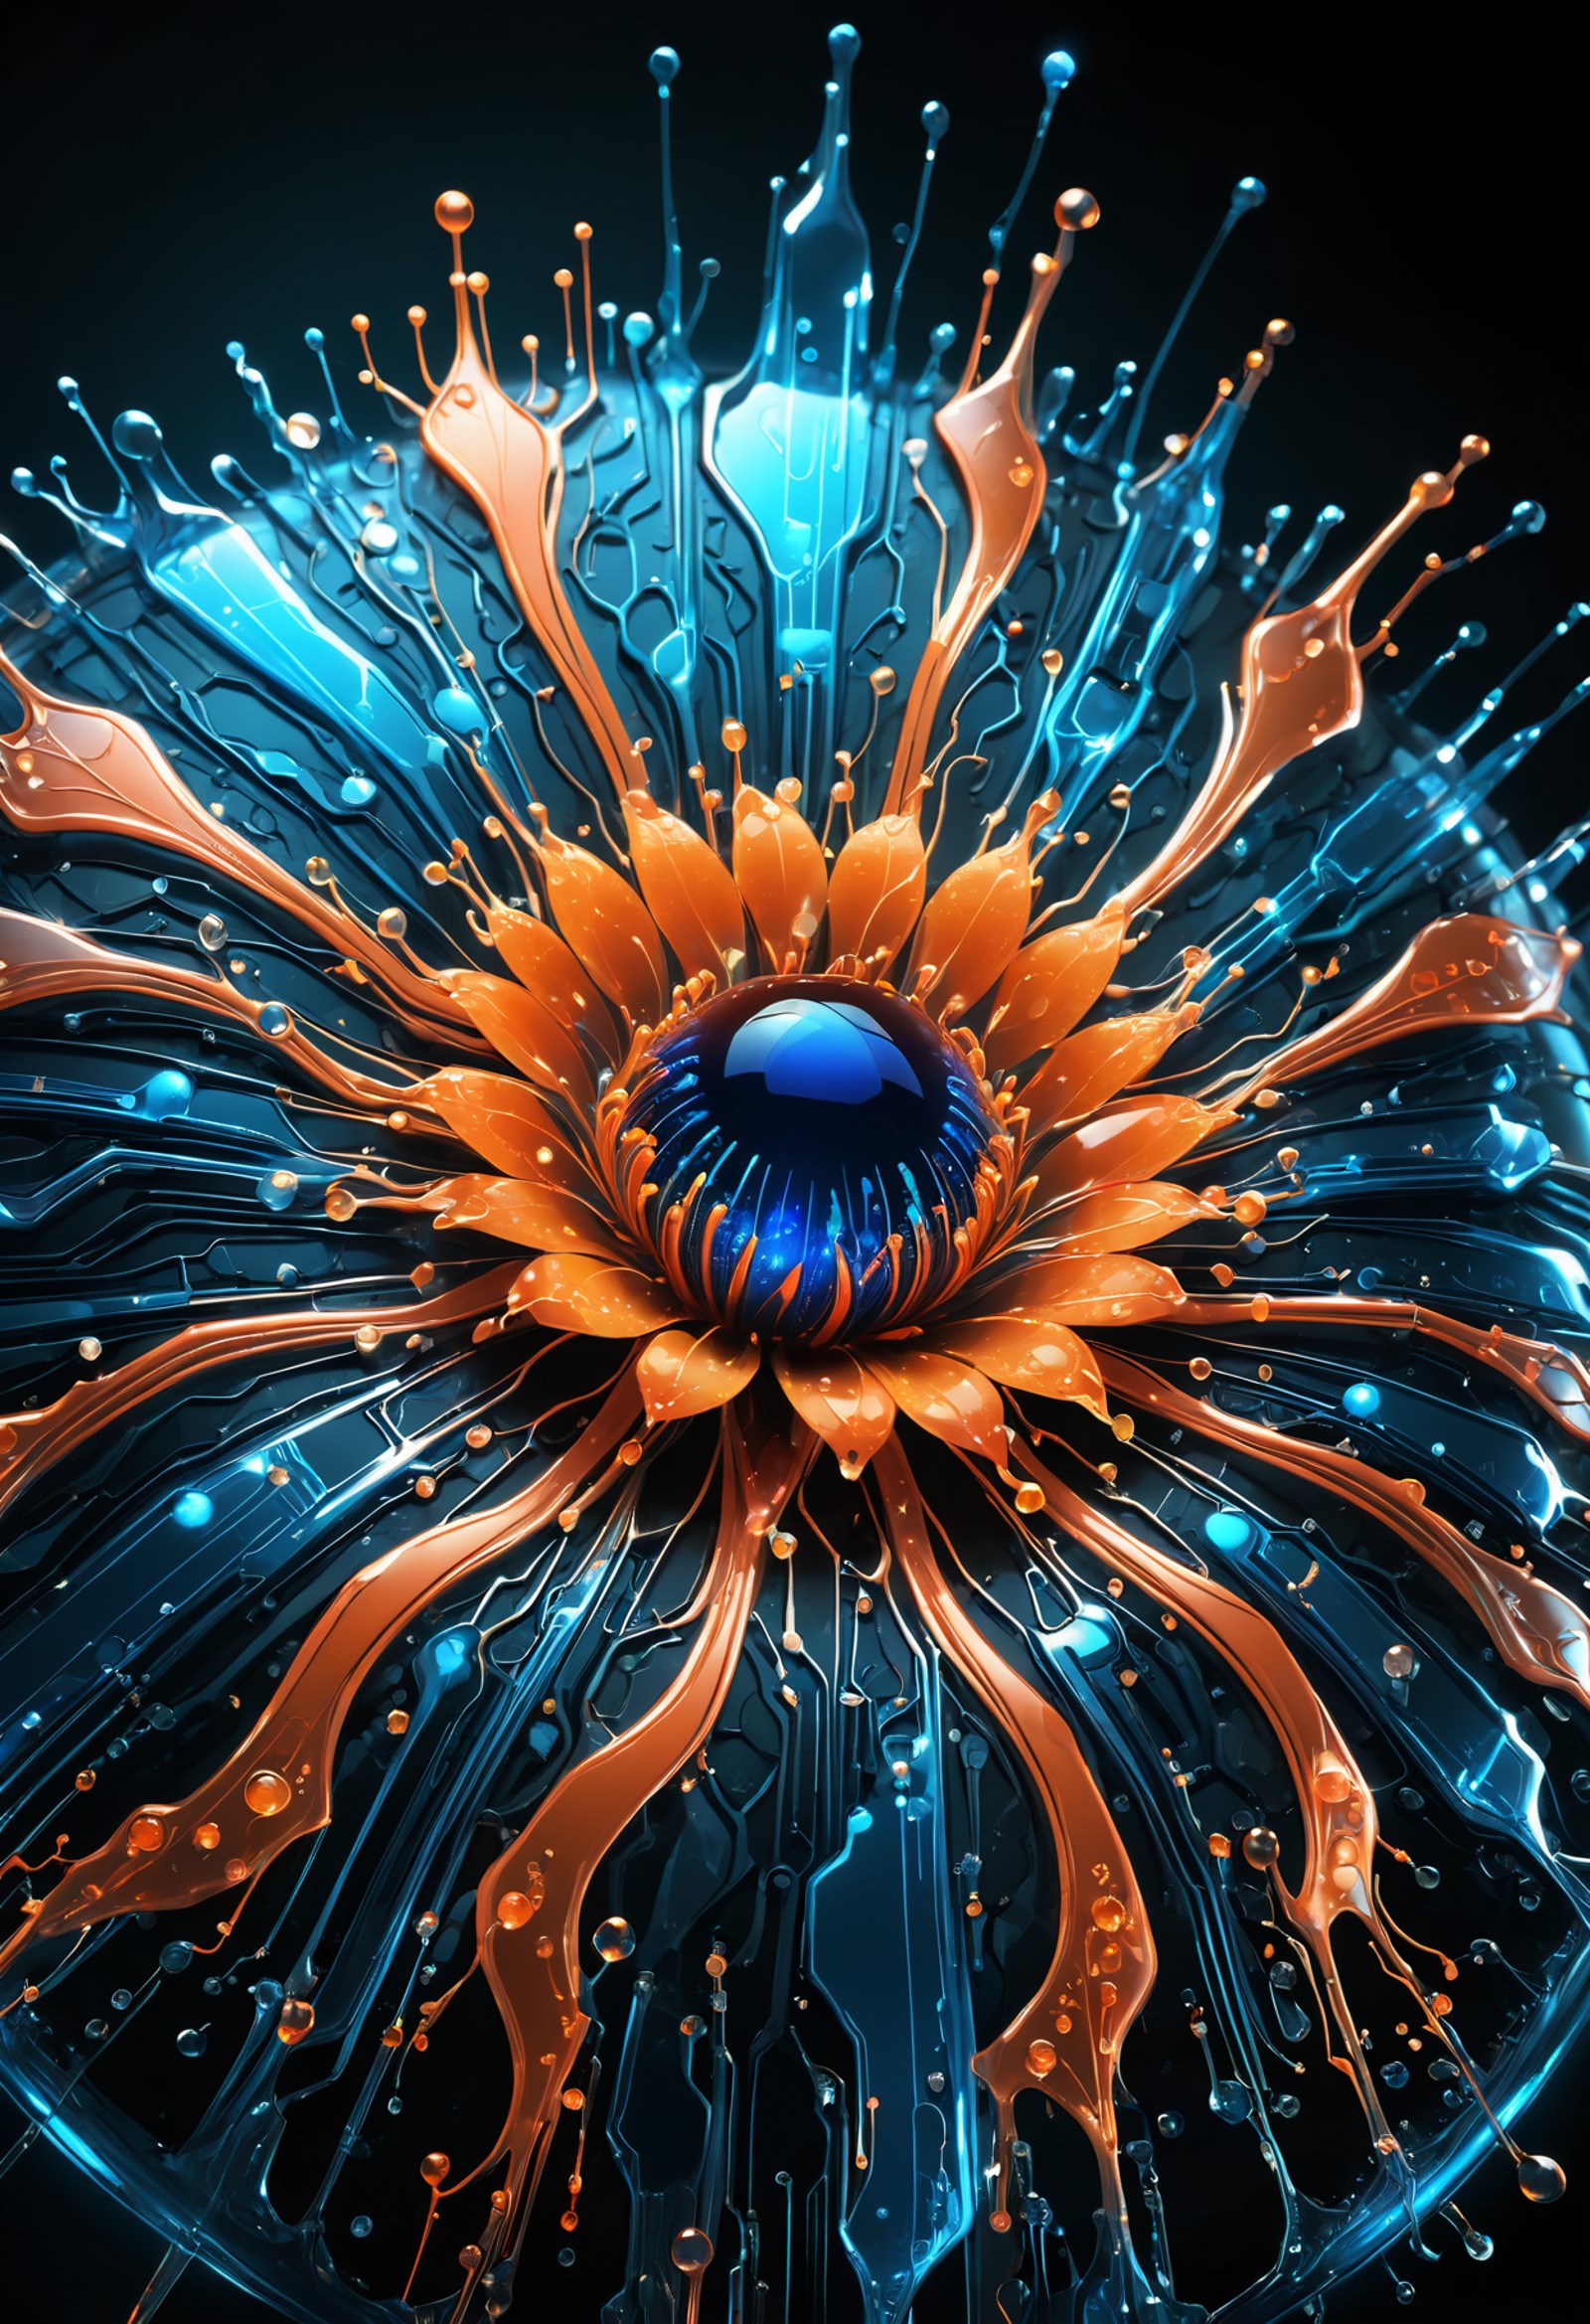 iccircuitart,orange and blue theme,macro photo, sparkling magical fantasy glass flower dewdrop, very detailed, amazing qua...